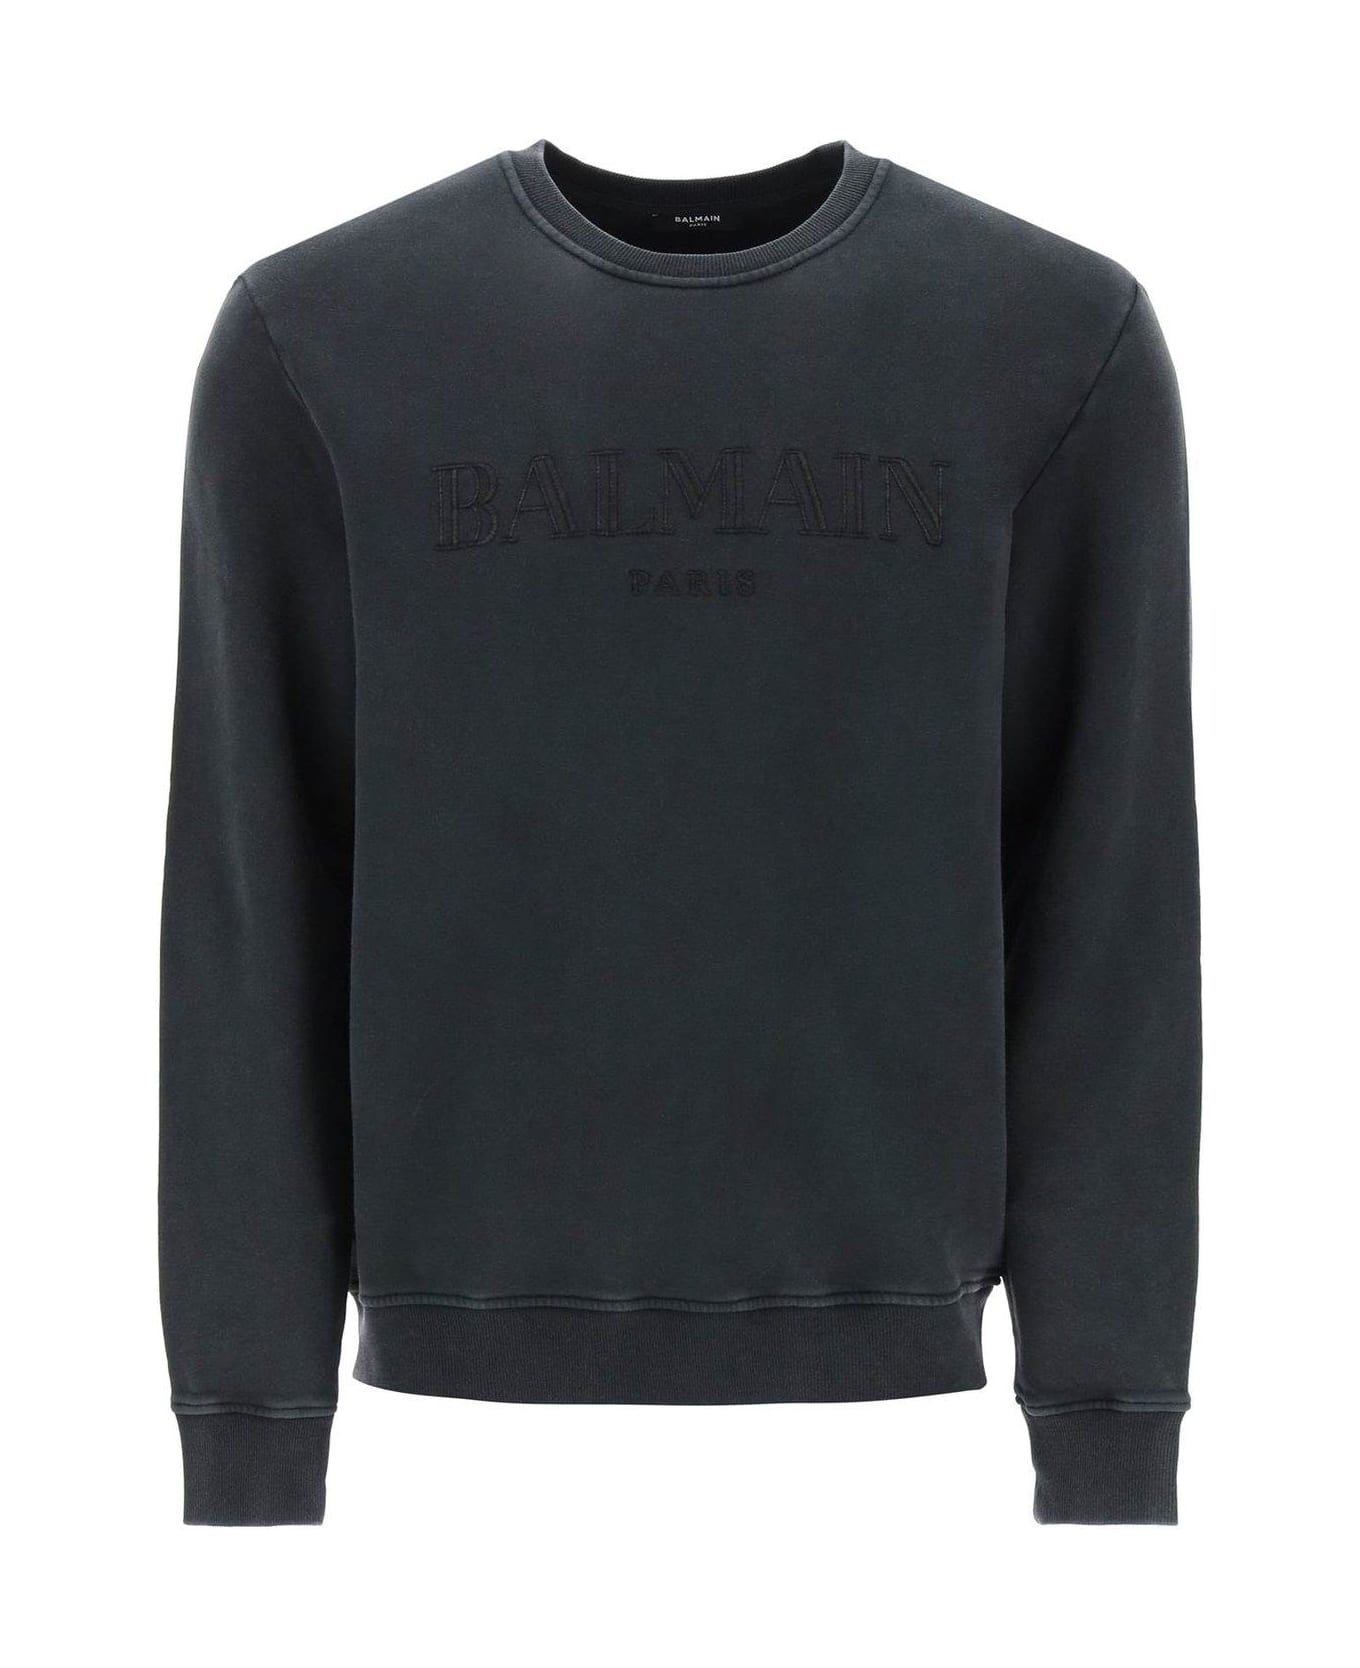 Balmain Vintage Logo Embroidered Sweatshirt - GRIS GRIS (Grey)